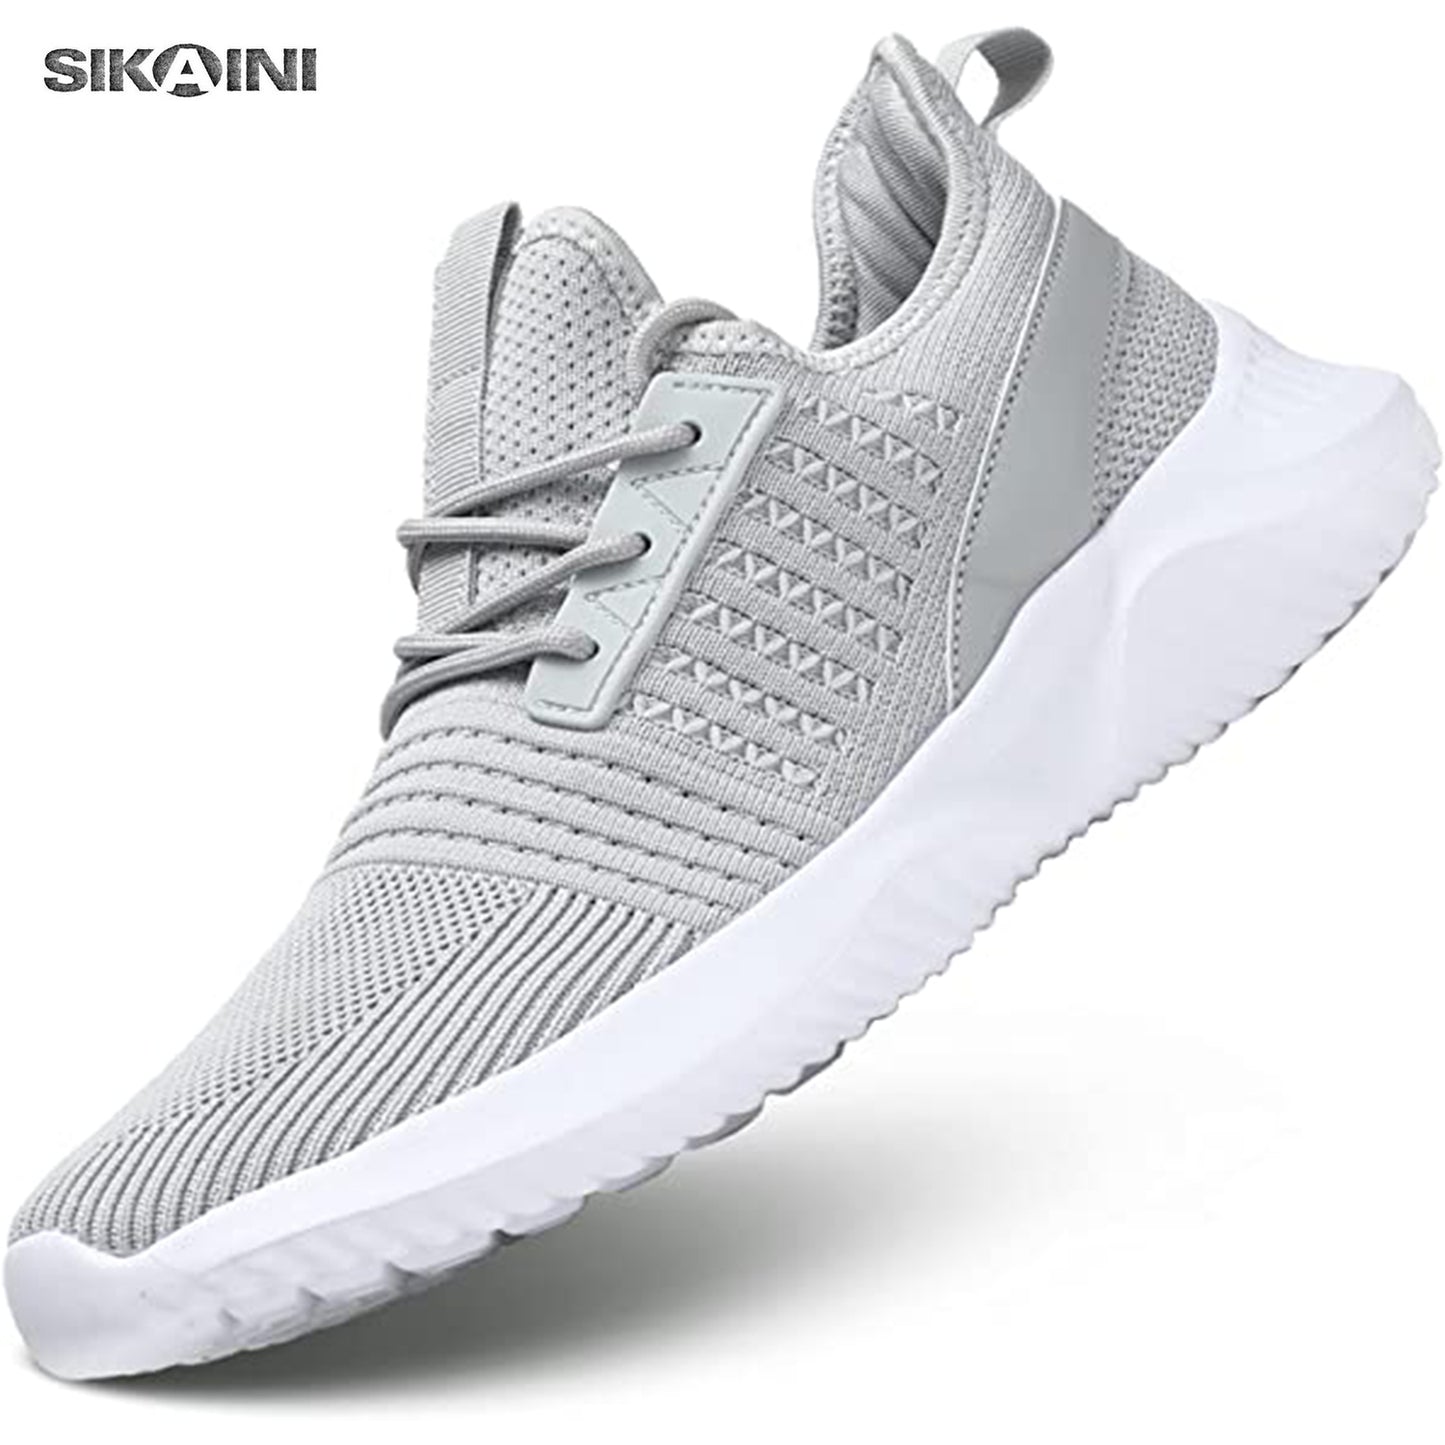 SIKAINI Men's Running Shoes Light Comfort Casual Sport Mesh Sneakers